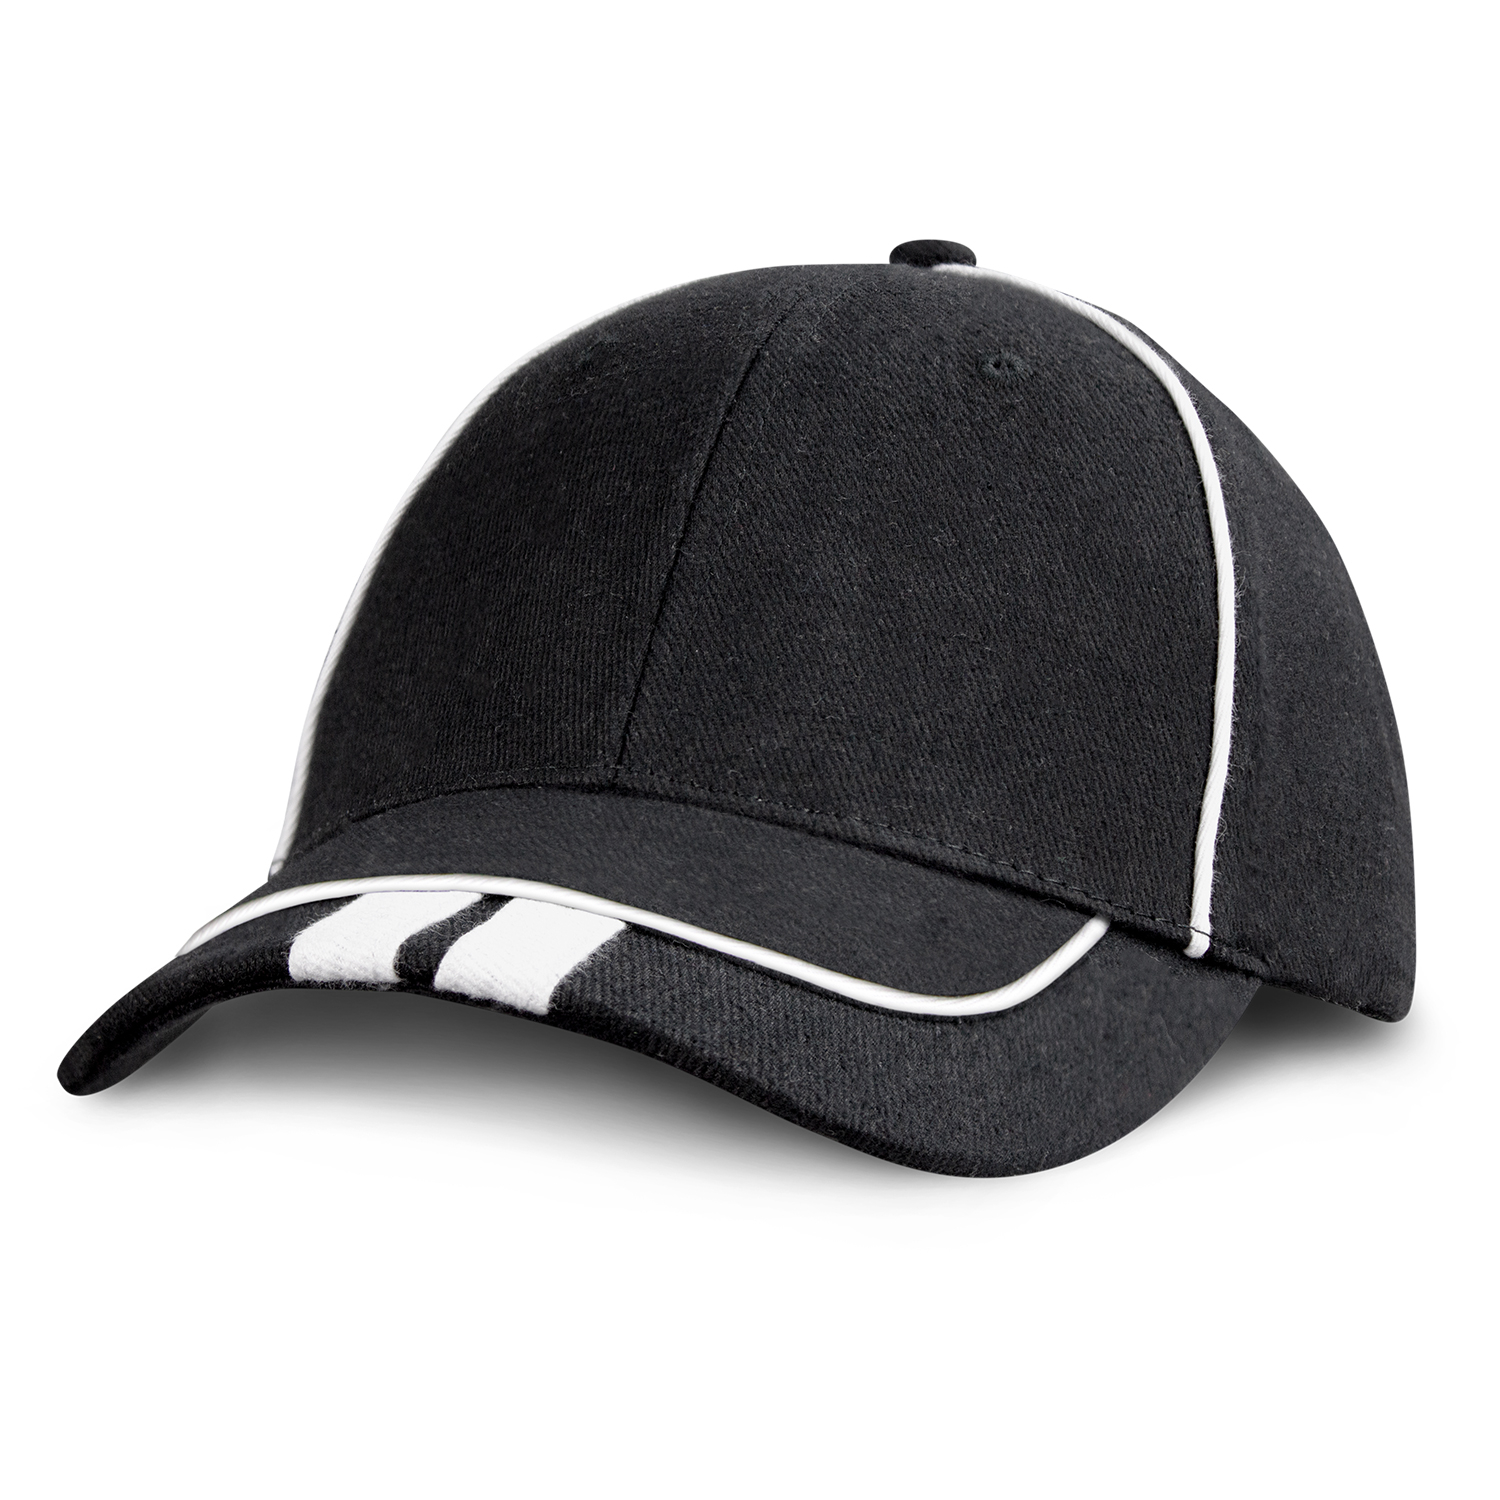 Headwear Express Hanford Cap cap